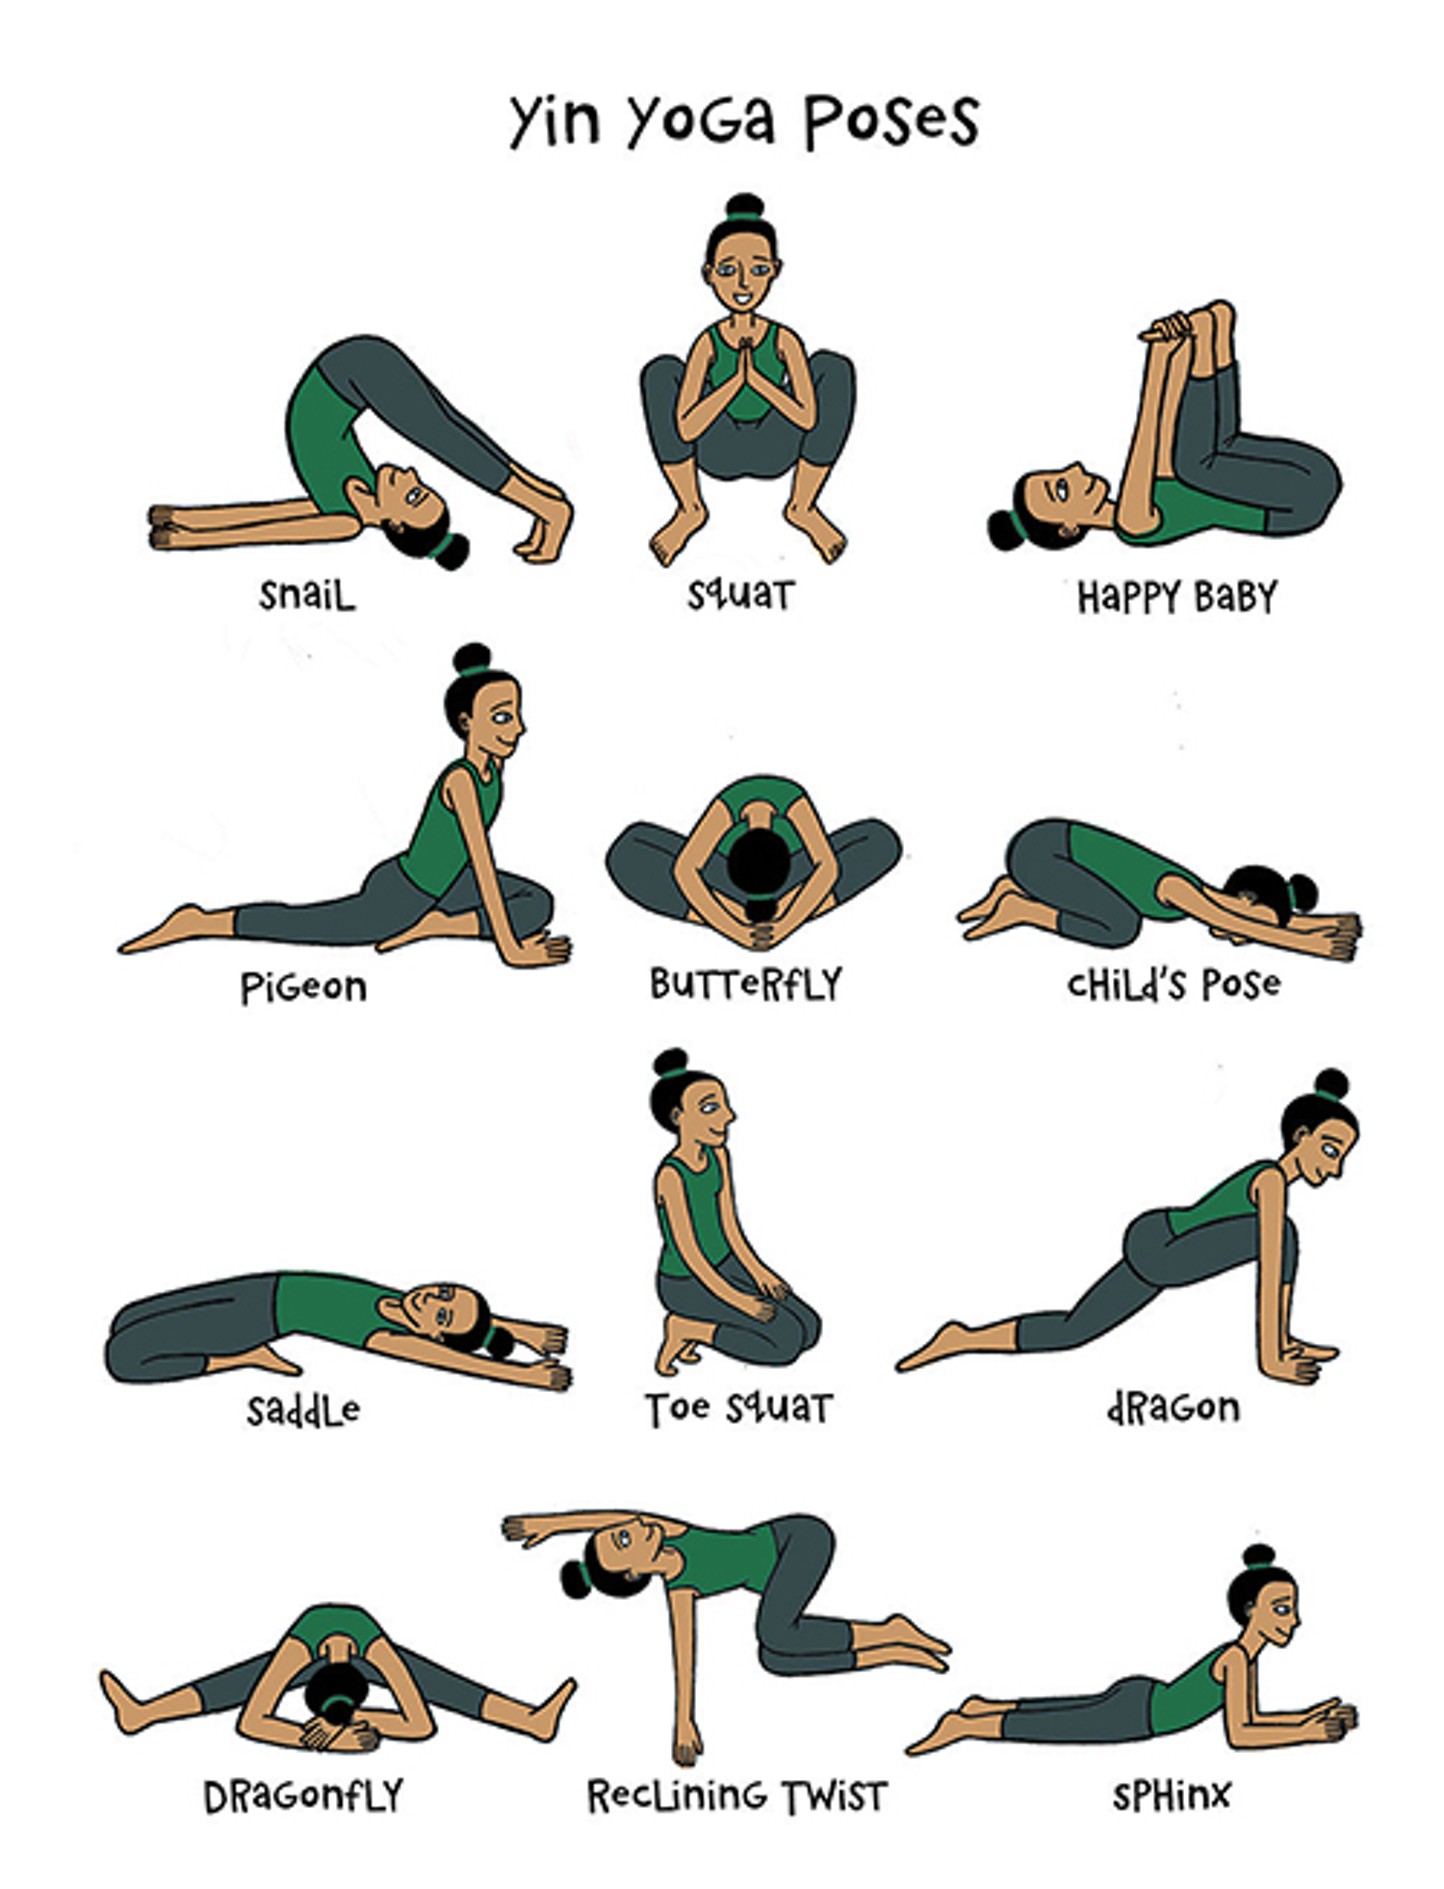 Turning Inward with Yin Yoga, General Wellness, Hudson Valley